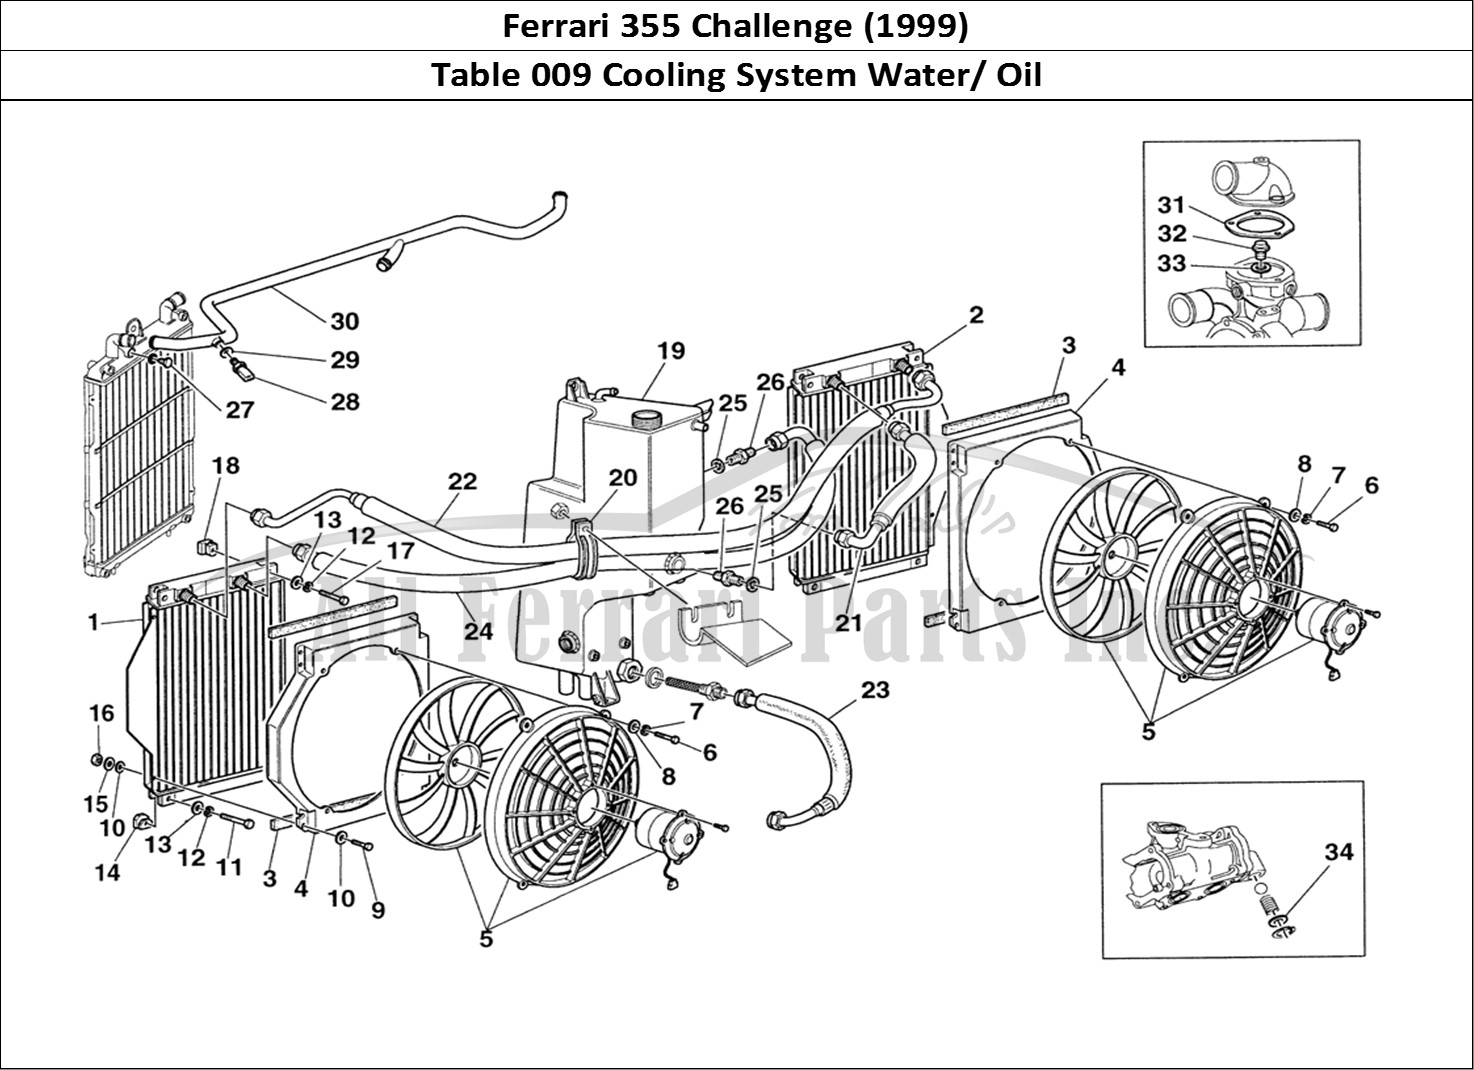 Ferrari Parts Ferrari 355 Challenge (1999) Page 009 Lubrication/Cooling